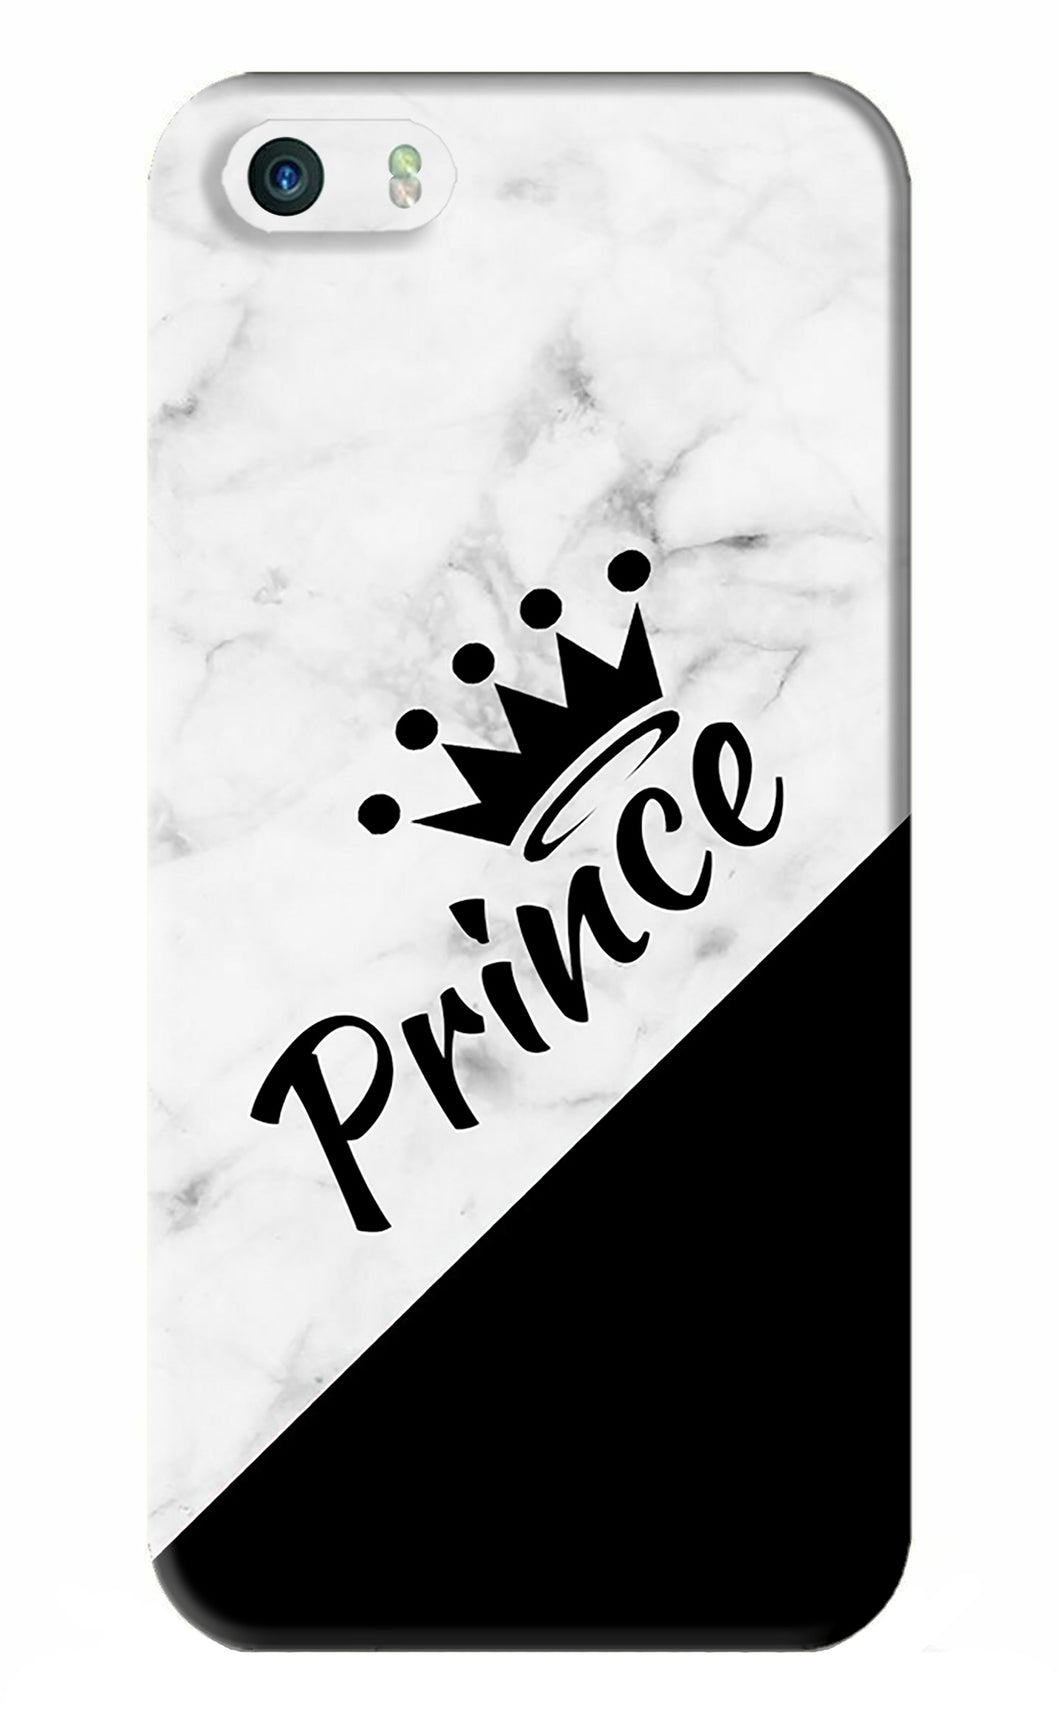 Prince iPhone 5S Back Skin Wrap